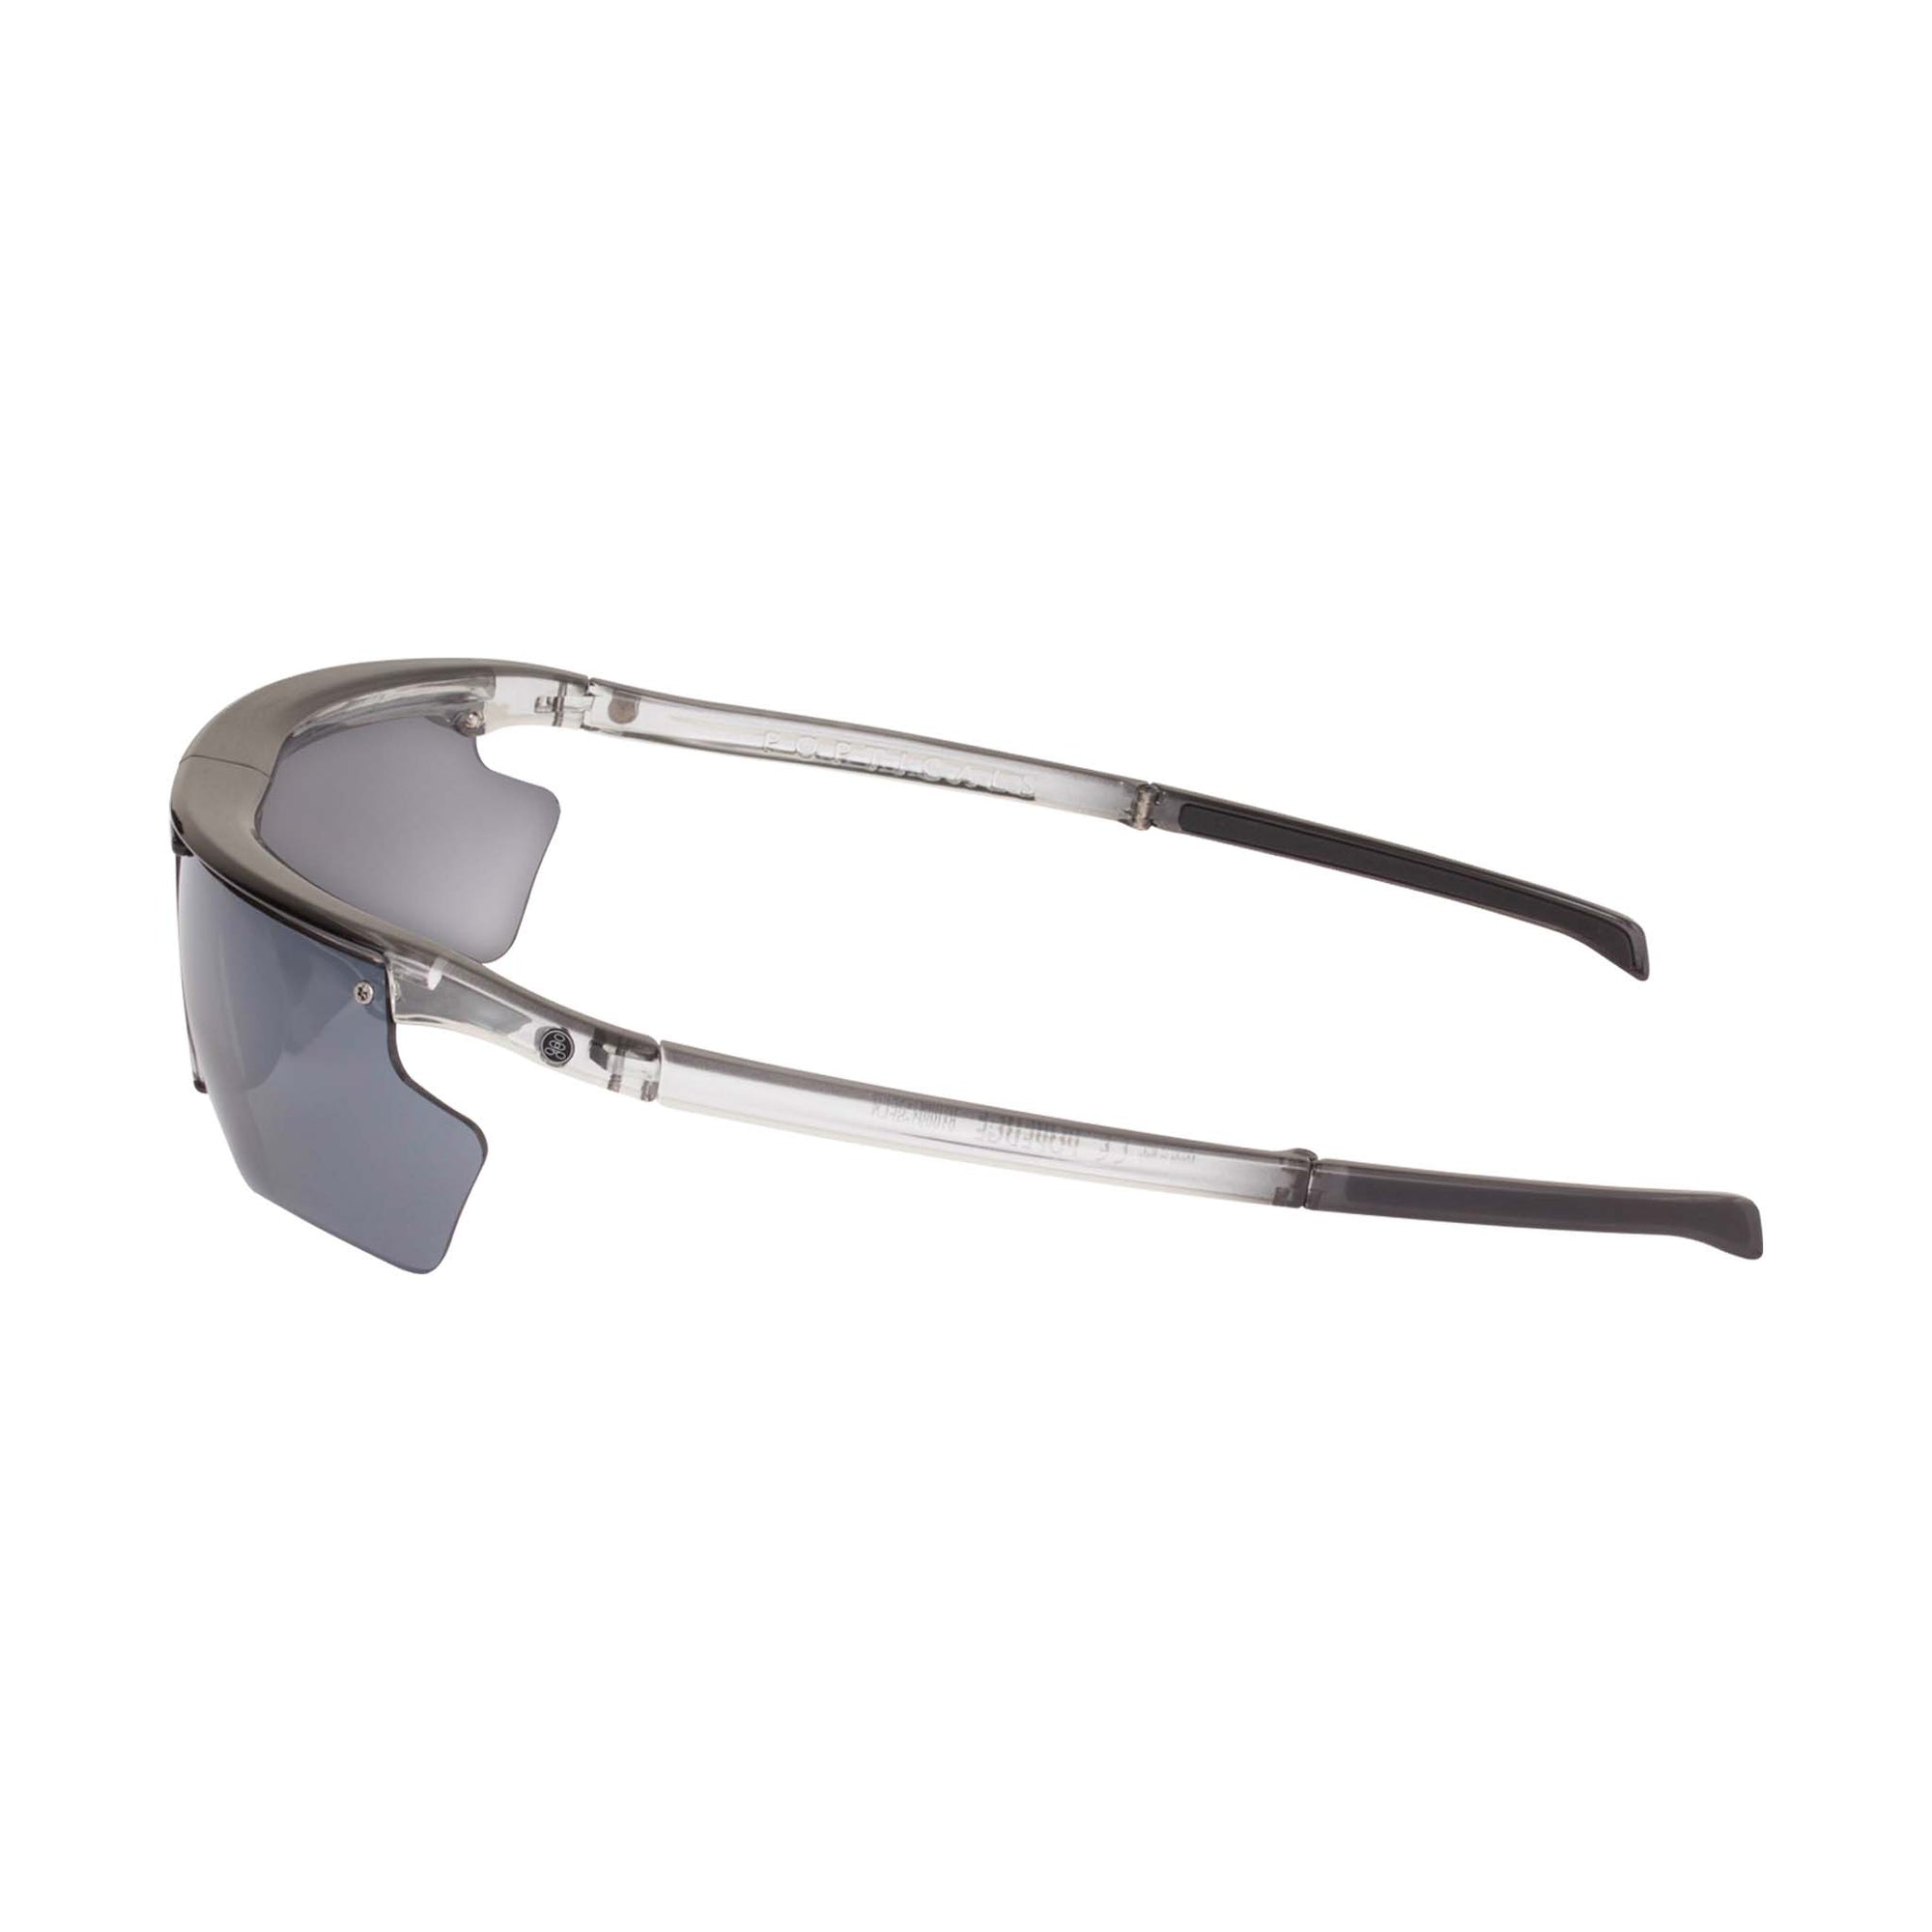 Popticals, Premium Compact Sunglasses, PopEdge, 010091-SFLN, Polarized Sunglasses, Gloss Smoke Frame, Gray Lenses with Silver Mirror Finish, Side View